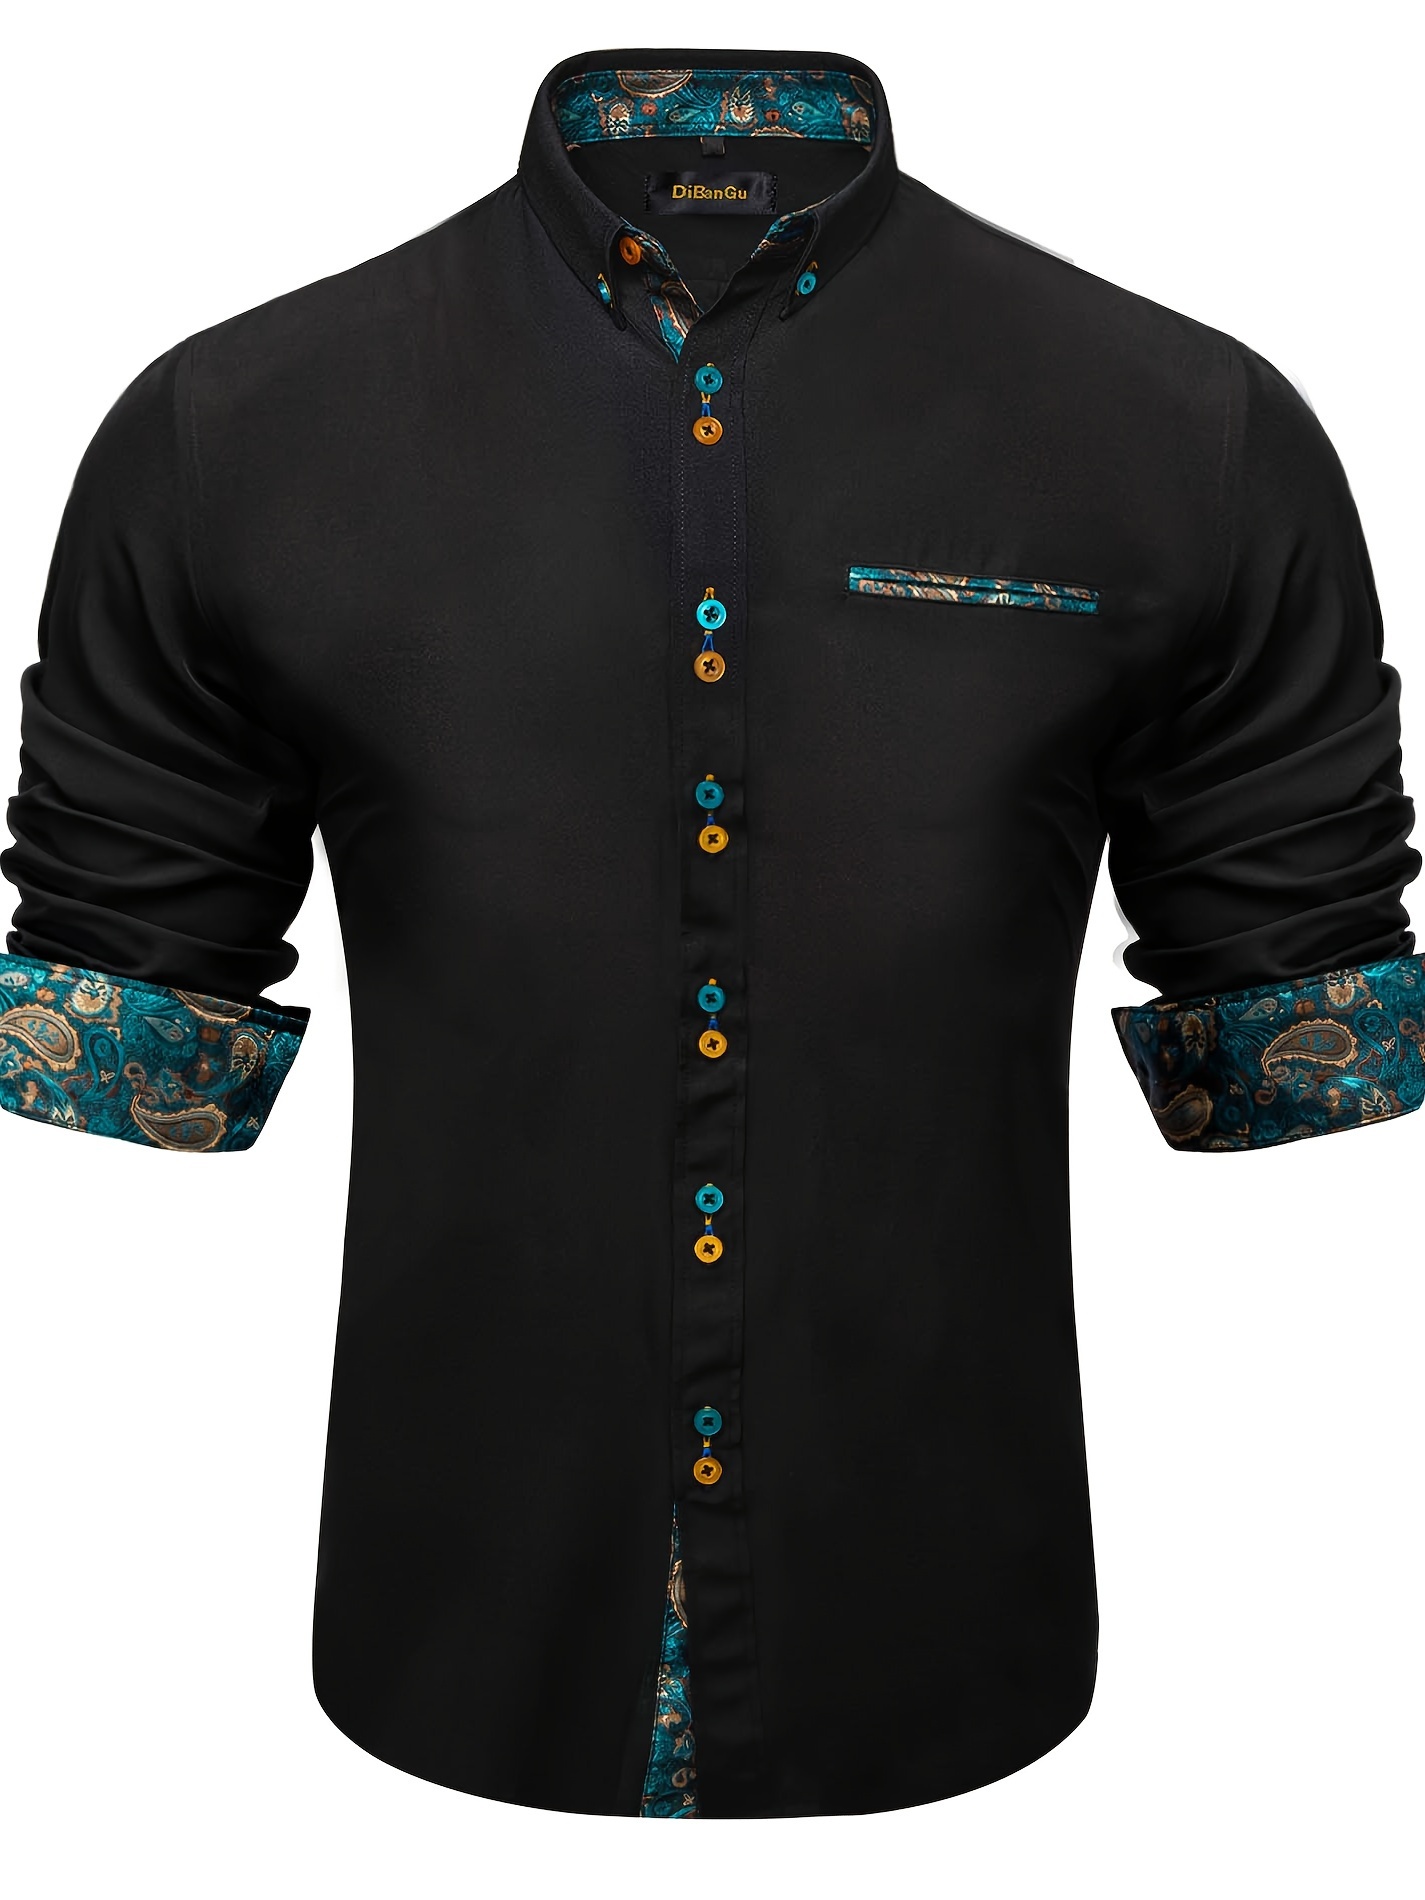 DiBanGu Men's Dress Shirt,Long Sleeve Casual Button Down Shirts Paisley  Regular Fit Shirt Business Party